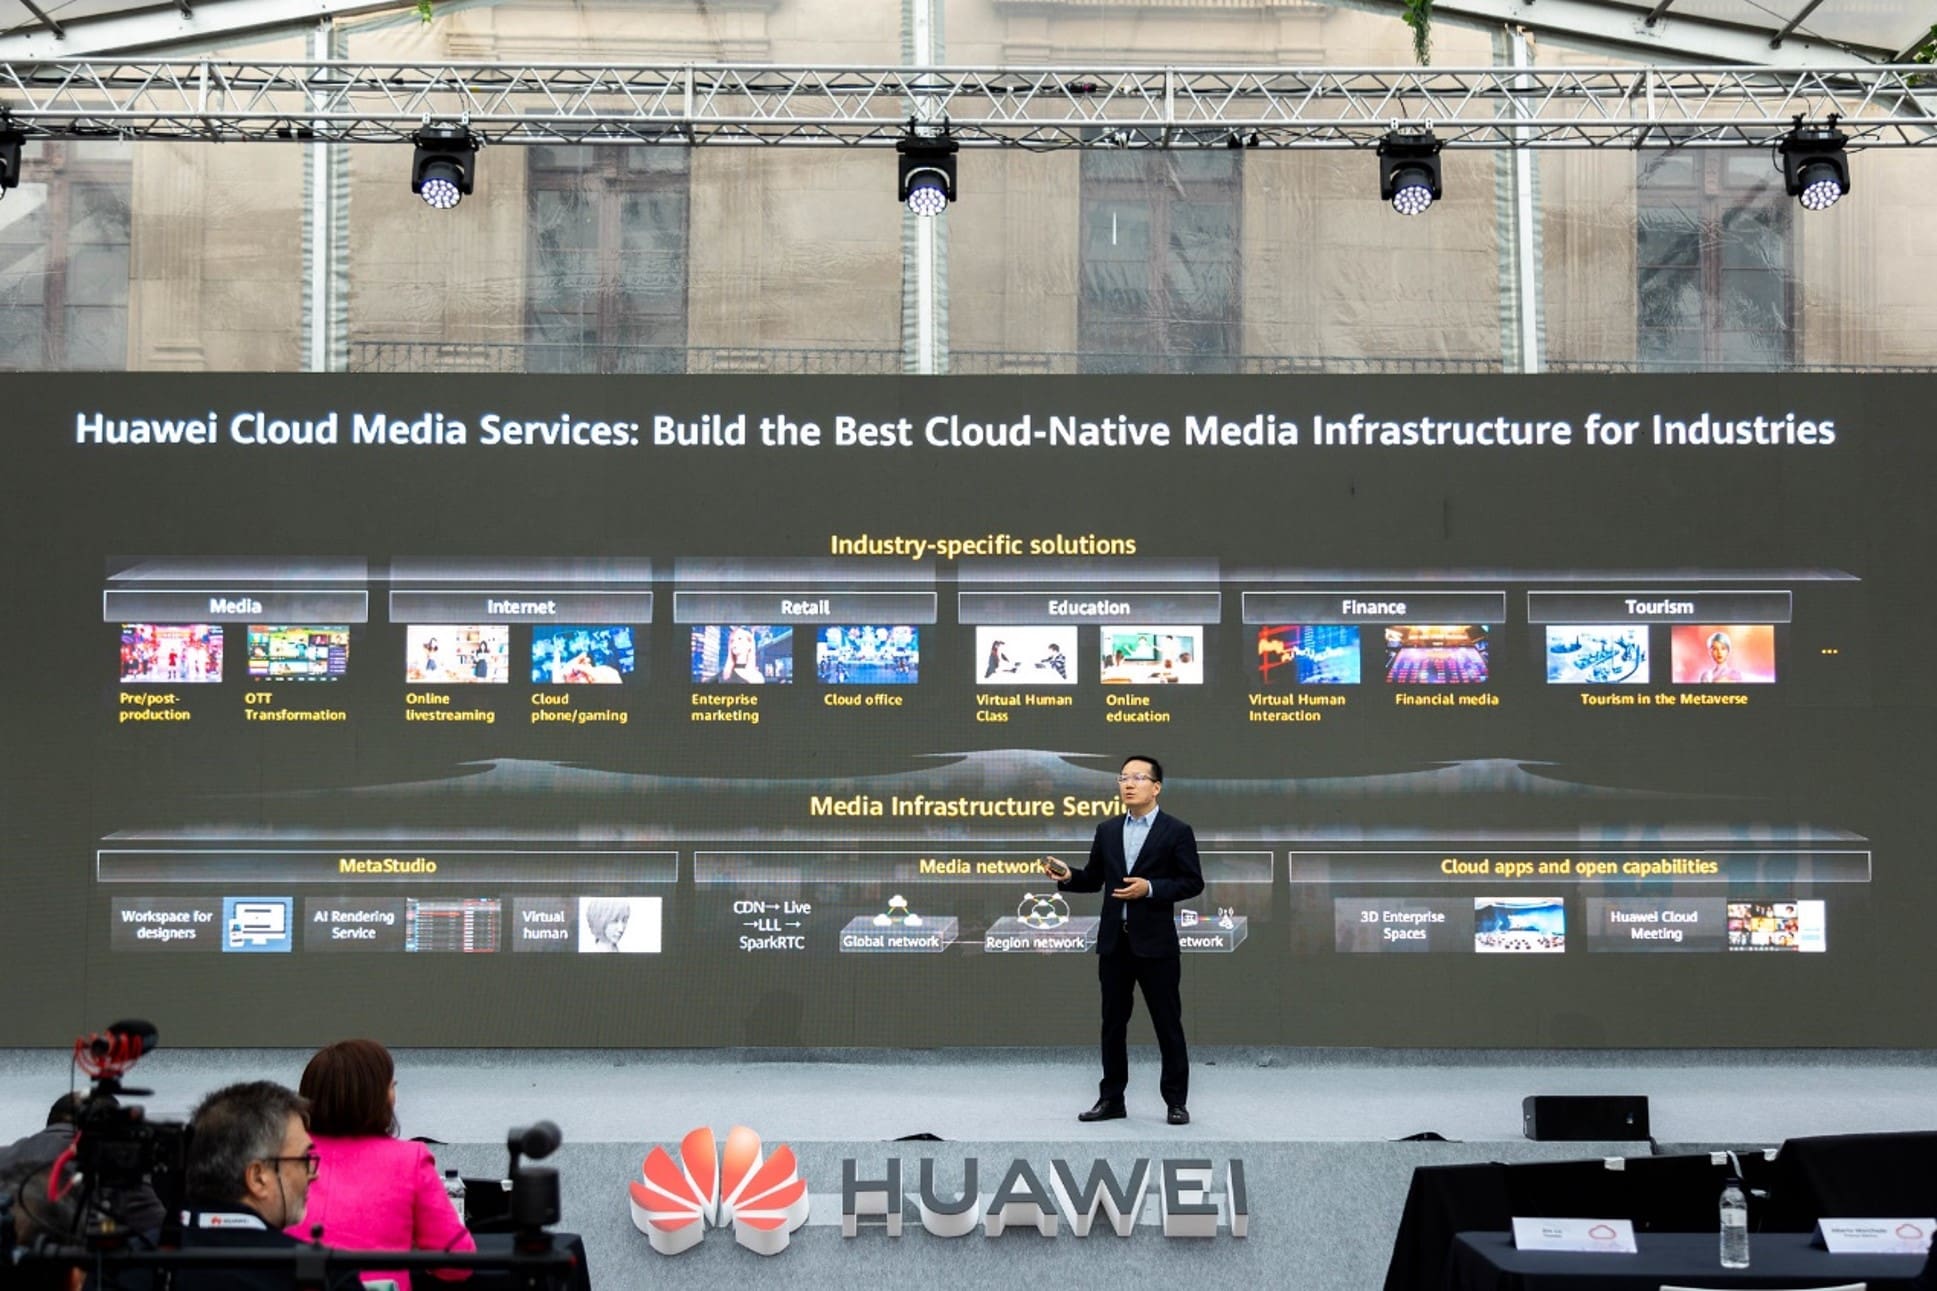 Jamy Lyu, President of Huawei Cloud Media Services